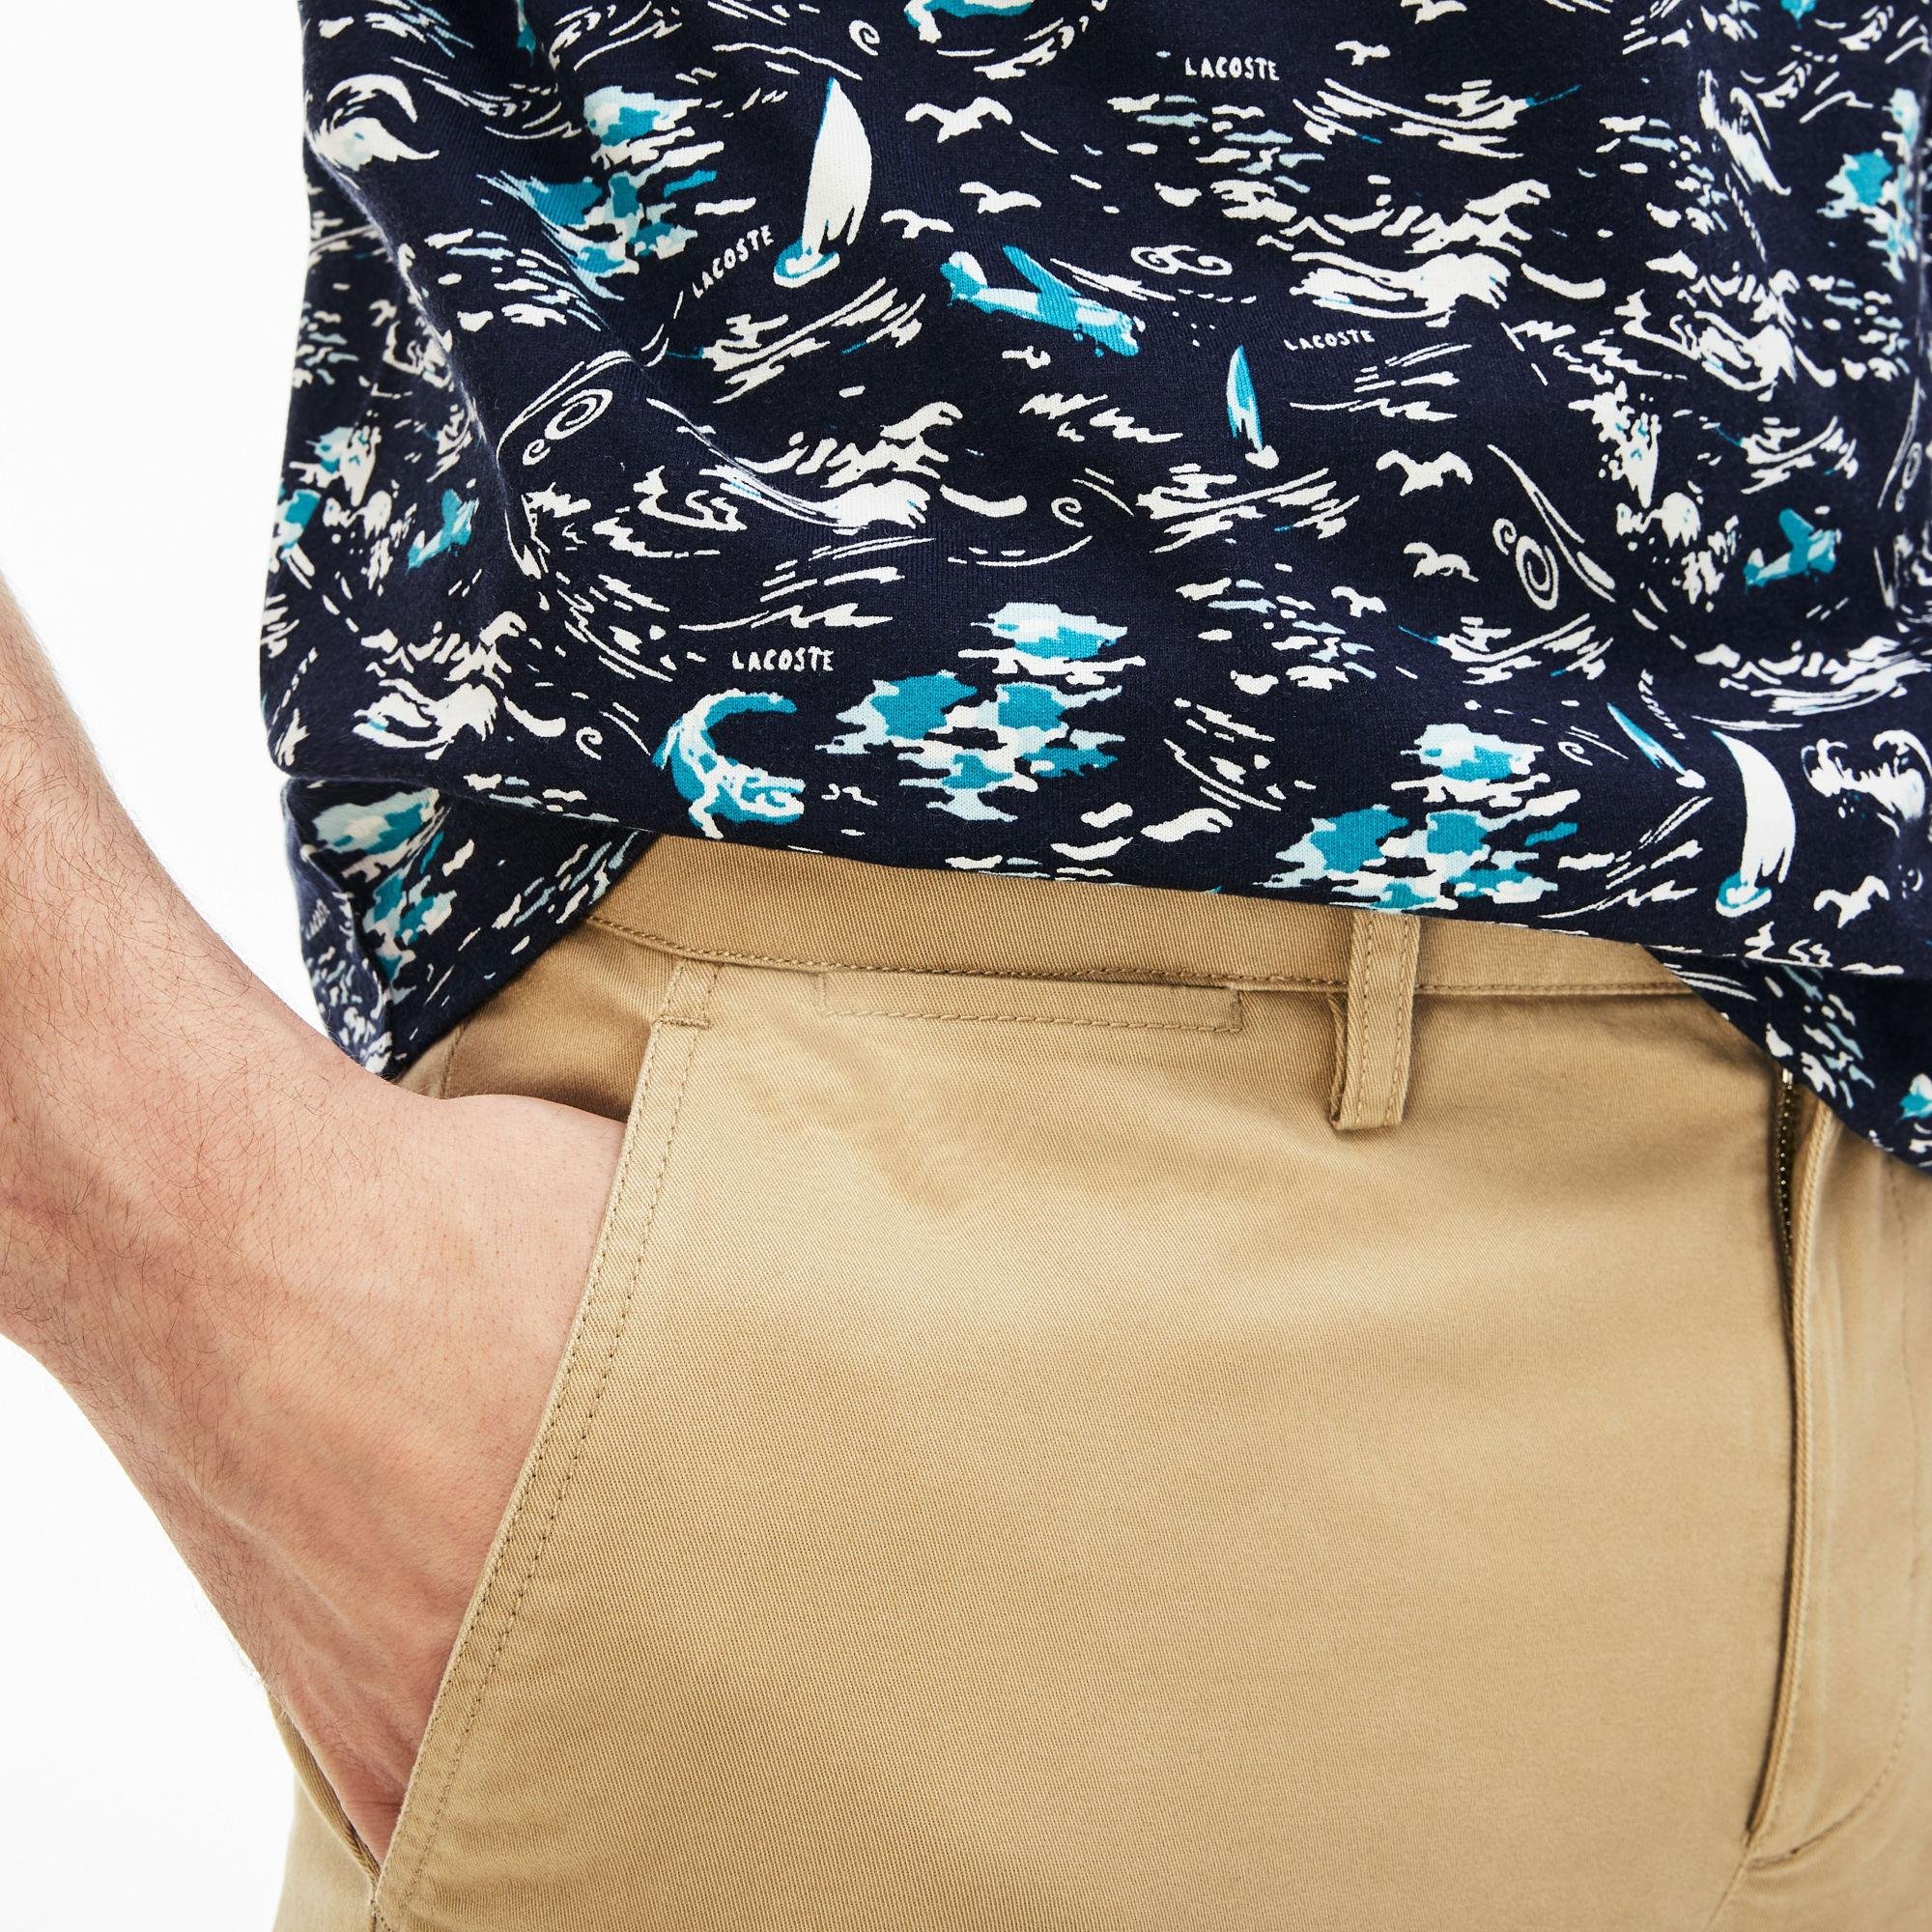 Lacoste Men's Slim Fit Stretch Gabardine Chino Pants